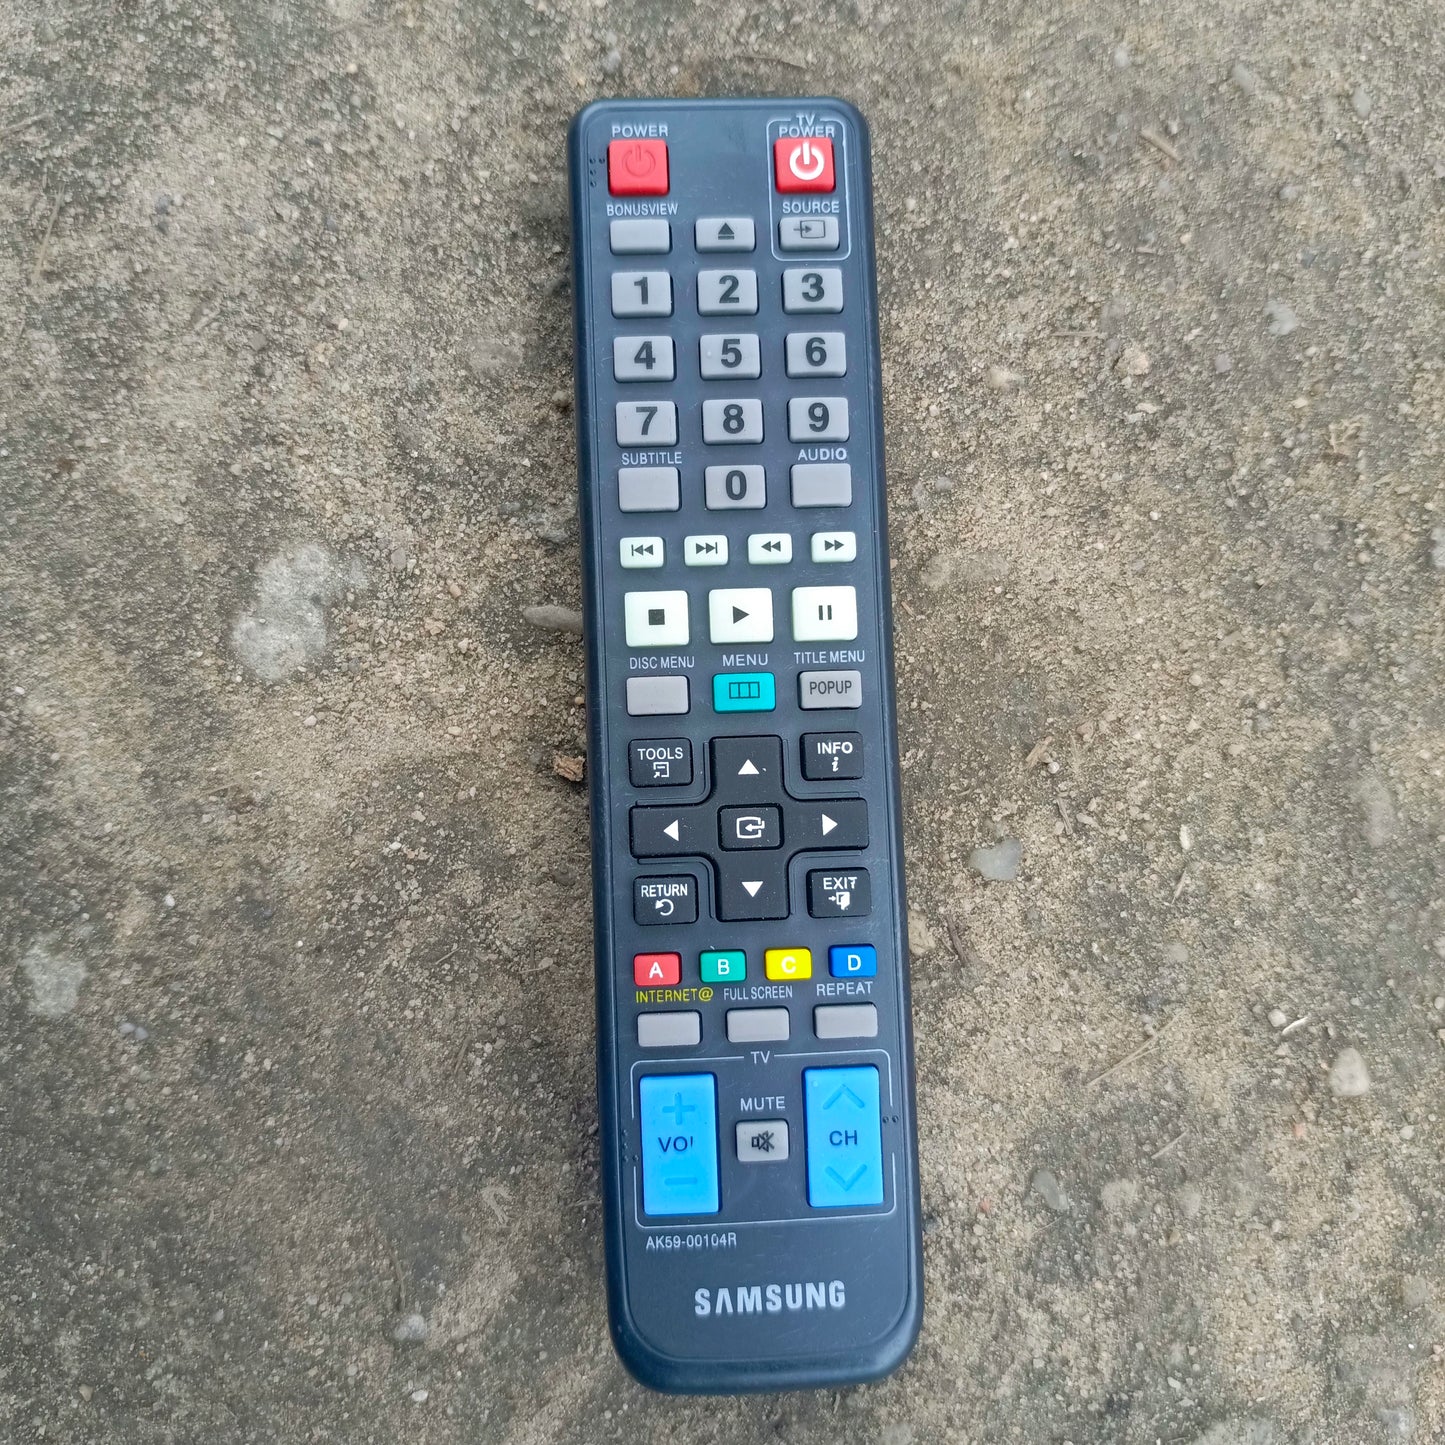 Samsung AK59-00104R Blu-ray DVD Player Remote Control - Brand New